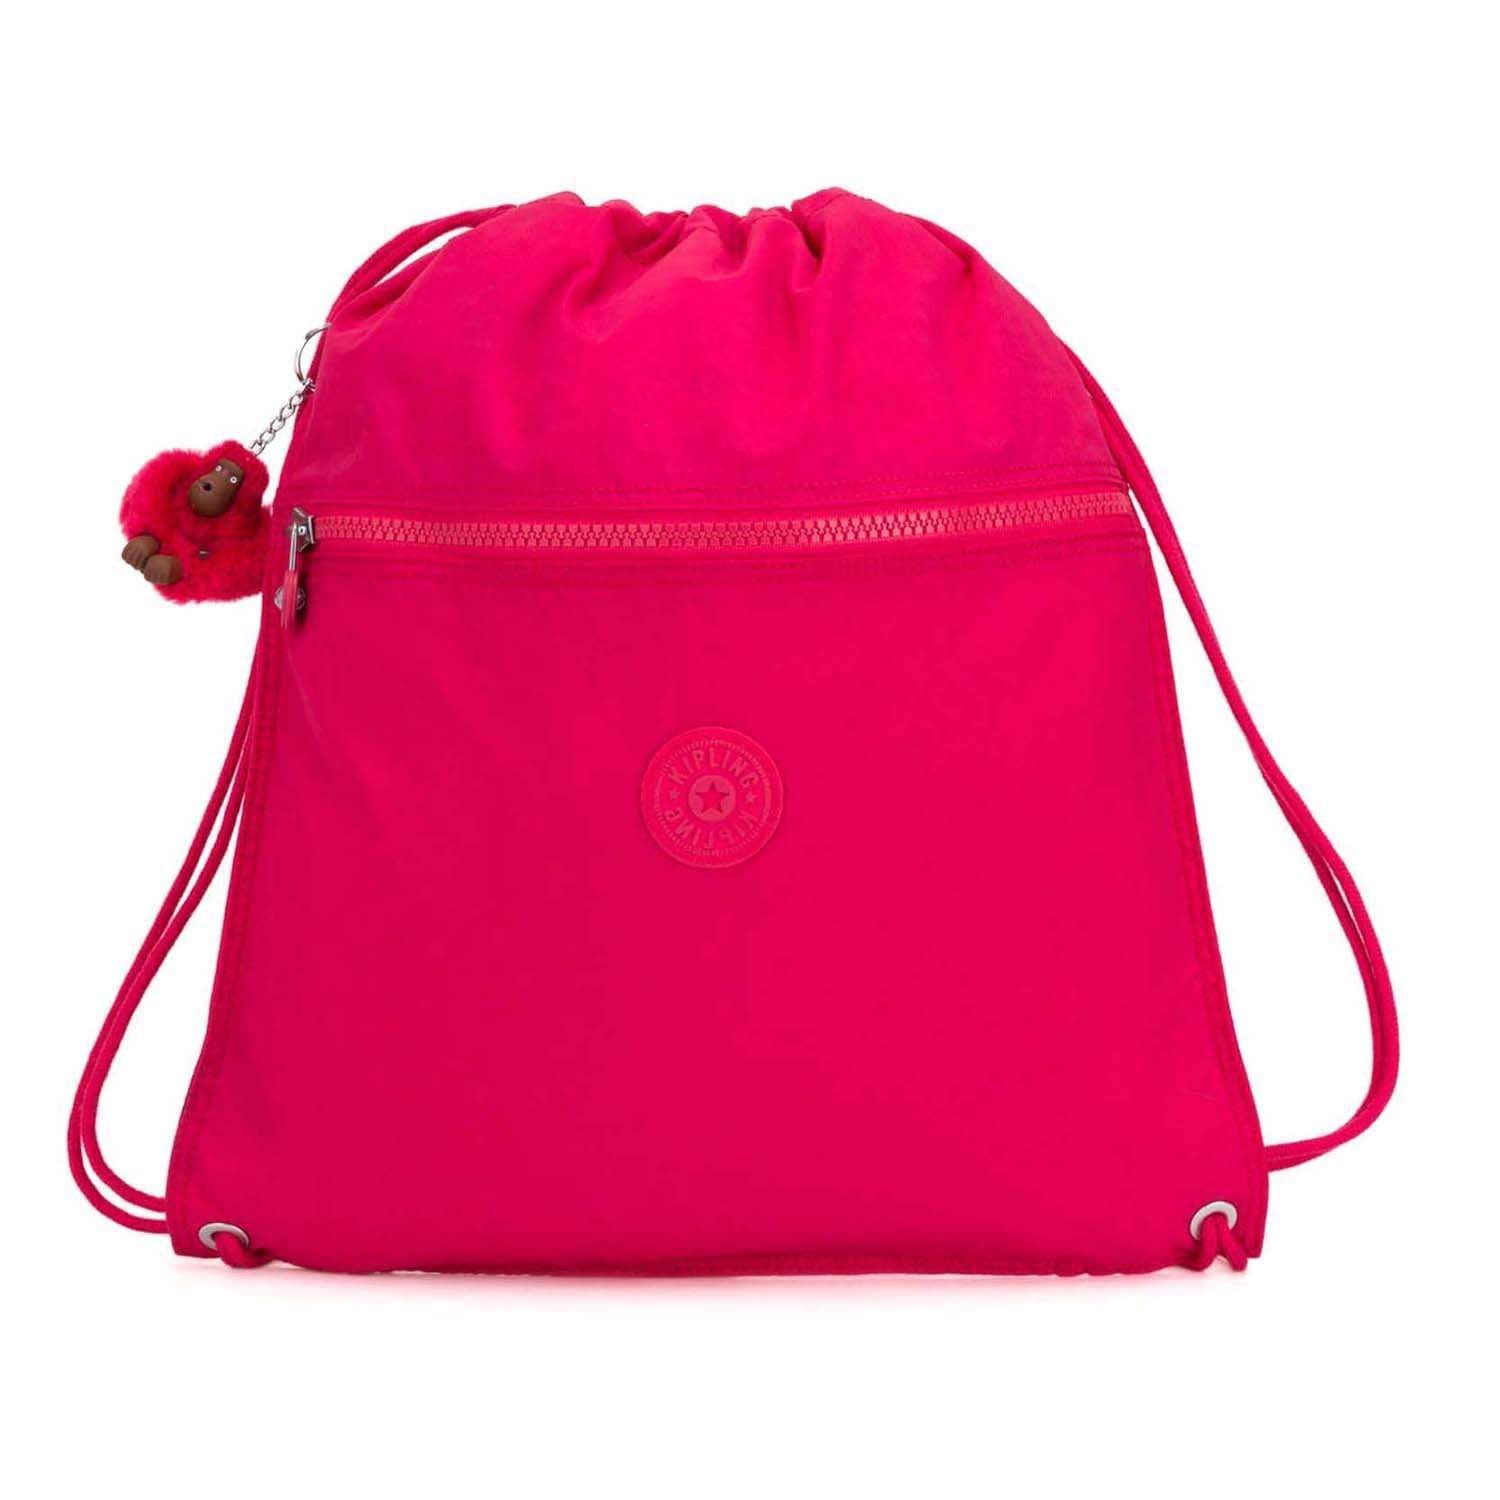 Kipling Supertaboo Drawstring Bag - True Pink - 09487-09F - Jashanmal Home